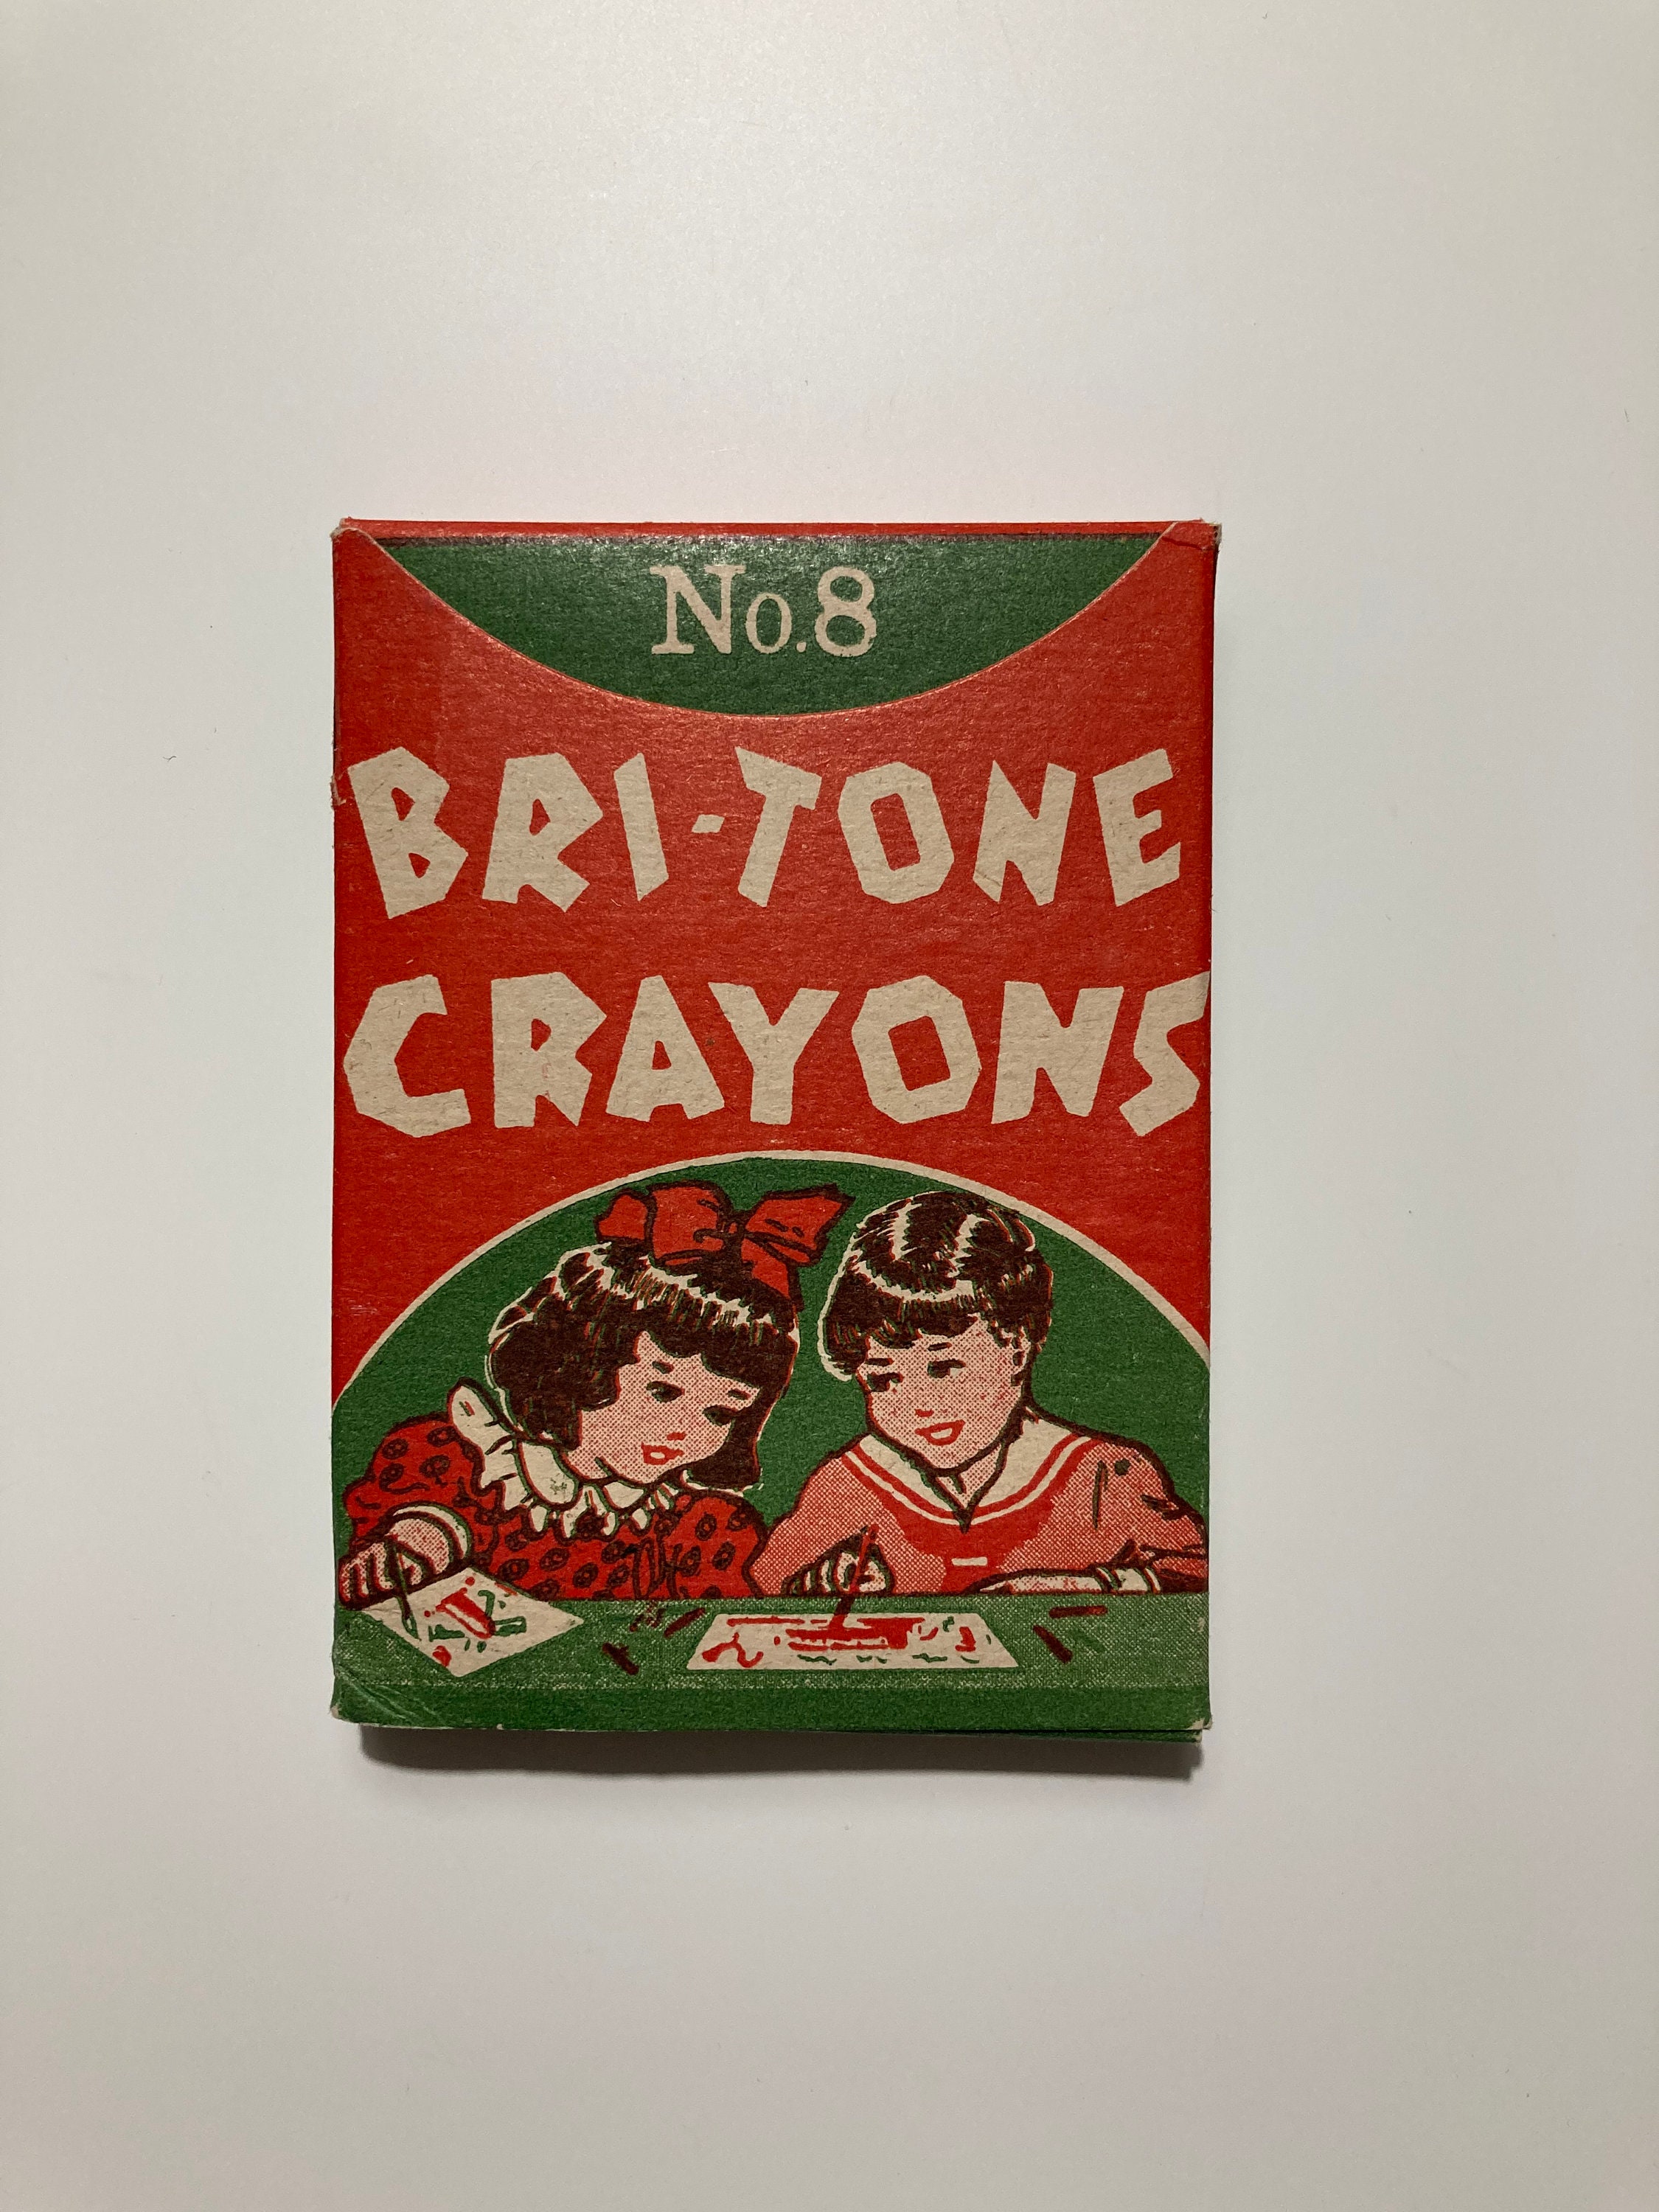 BRI-TONE Crayons by Imperial Crayon Company Brooklyn NY 